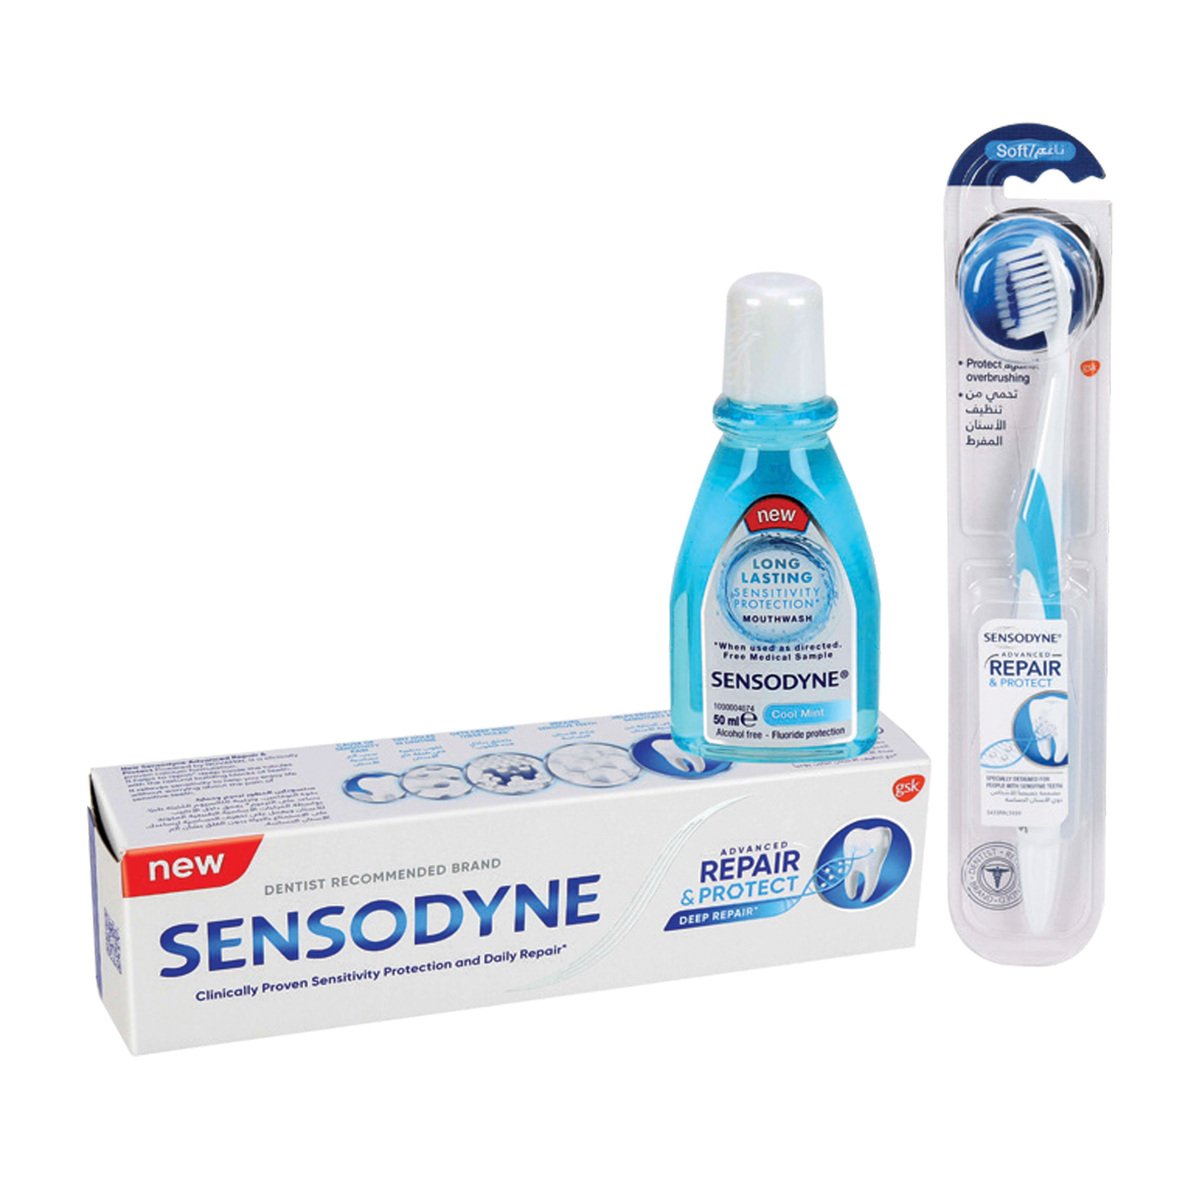 Sensodyne Repair & Protect Toothpaste 75 ml + Toothbrush 1 pc + Mouthwash 50 ml